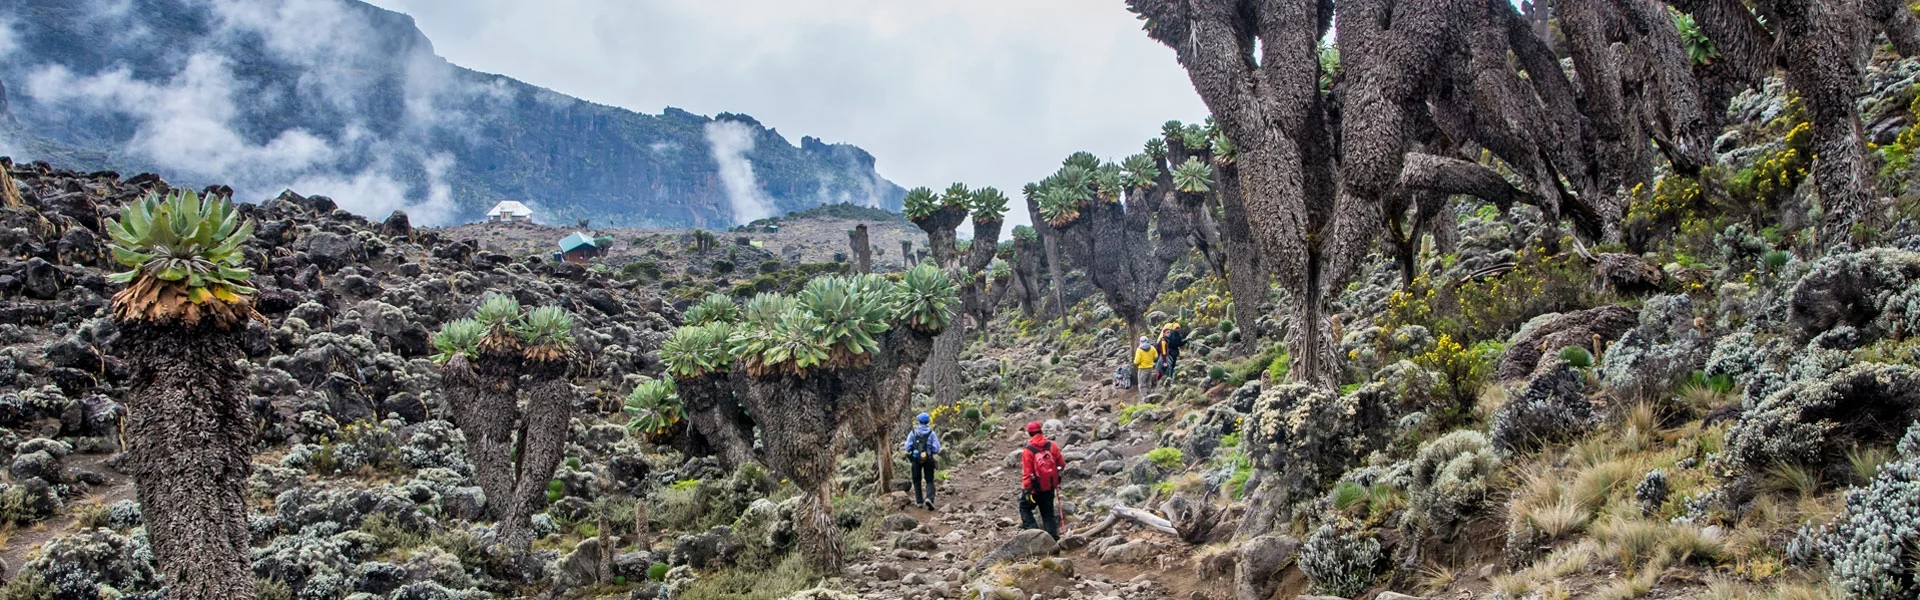 Vegetation, flora and plant life of Kilimanjaro